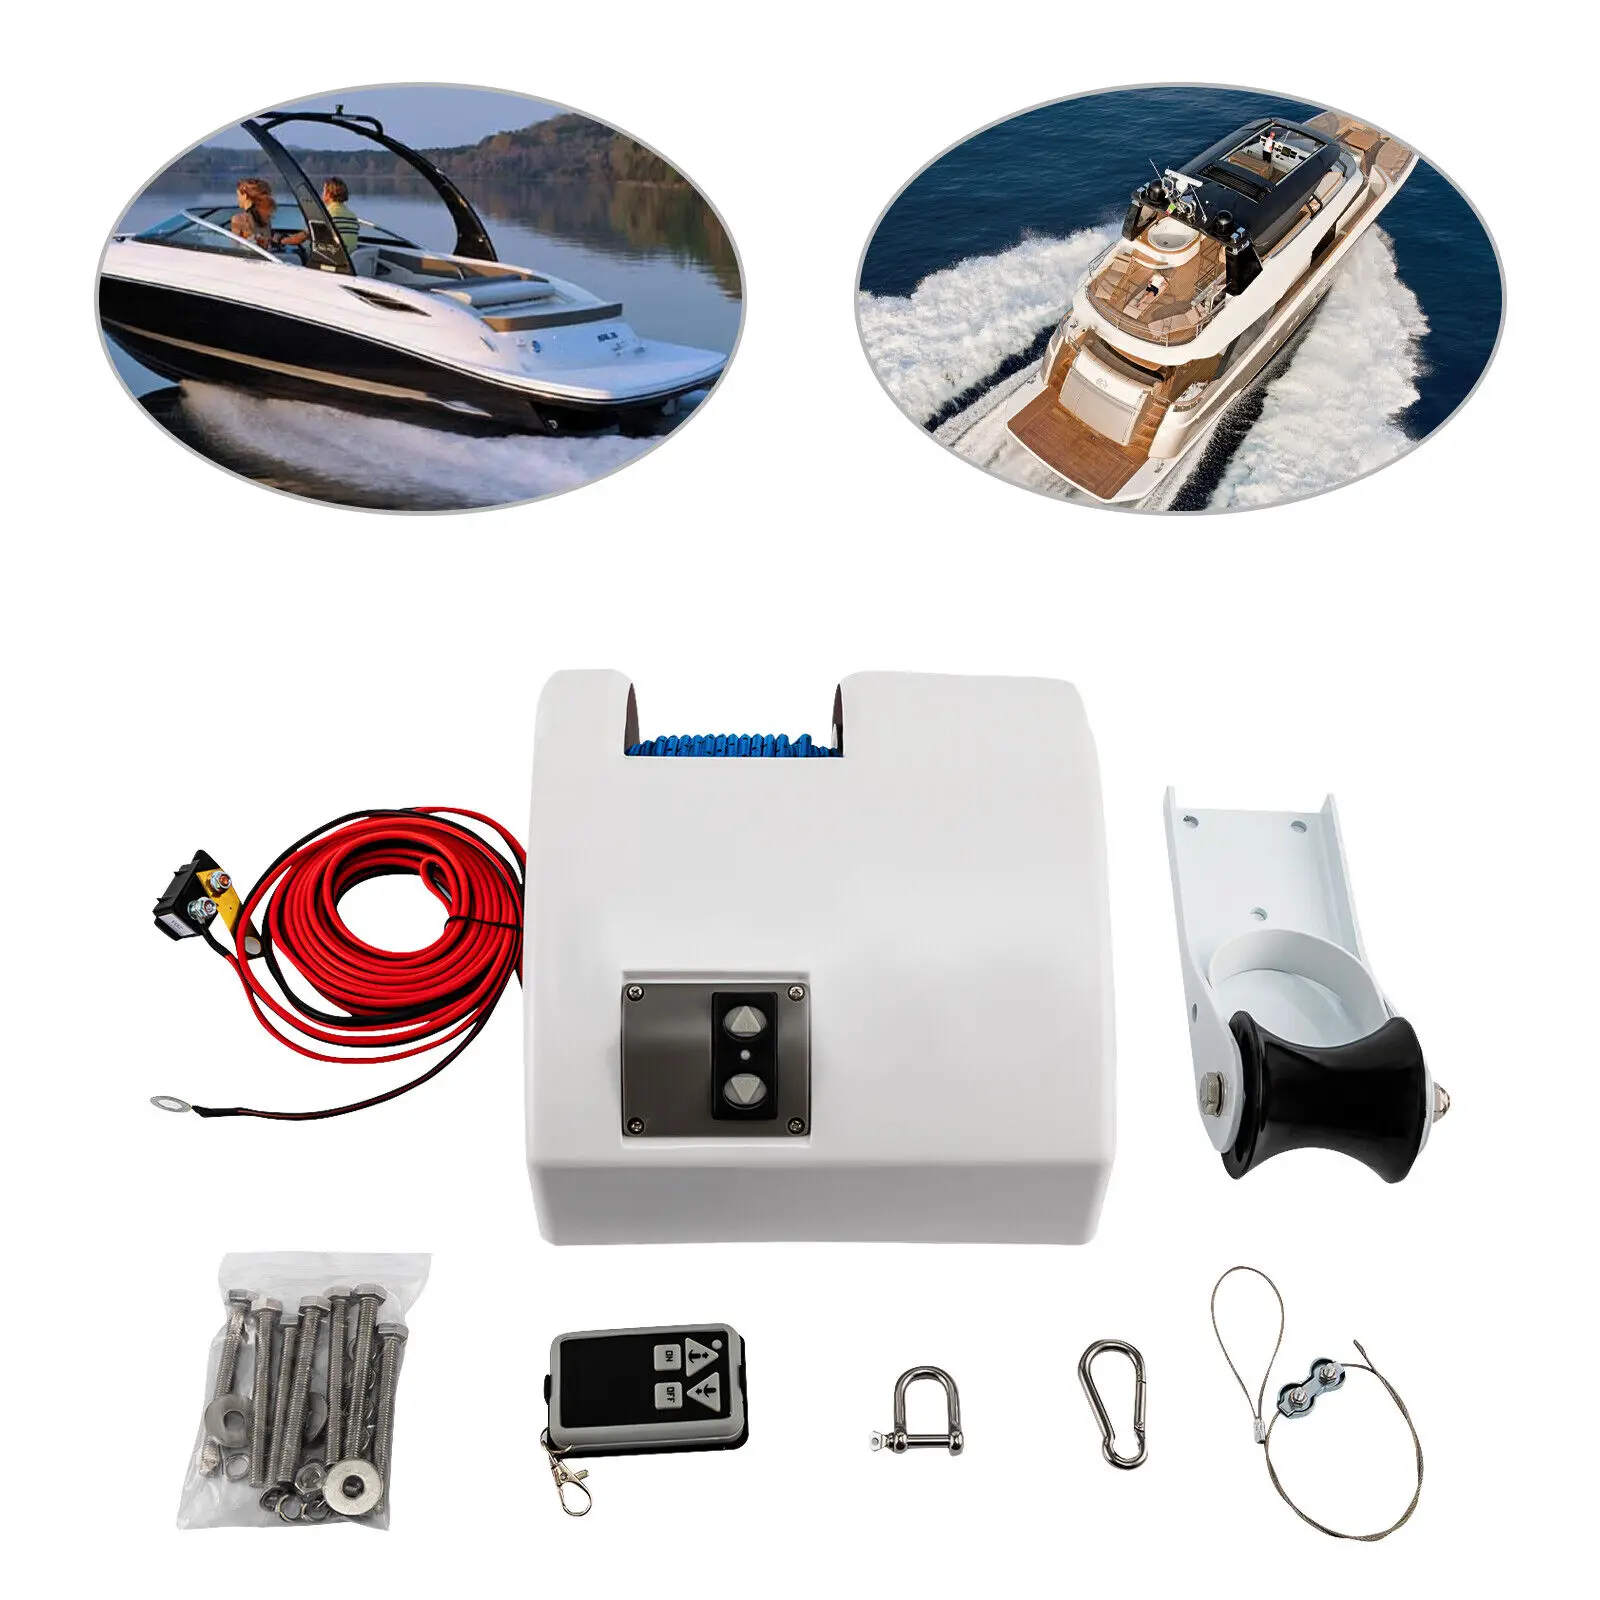 12V  25LBS Boat Marine Electric Windlass Anchor Winch W/Wireless Remote Control boat anchor winch pontoon windlass wireless remote switch kit sail trim controller boston whaler